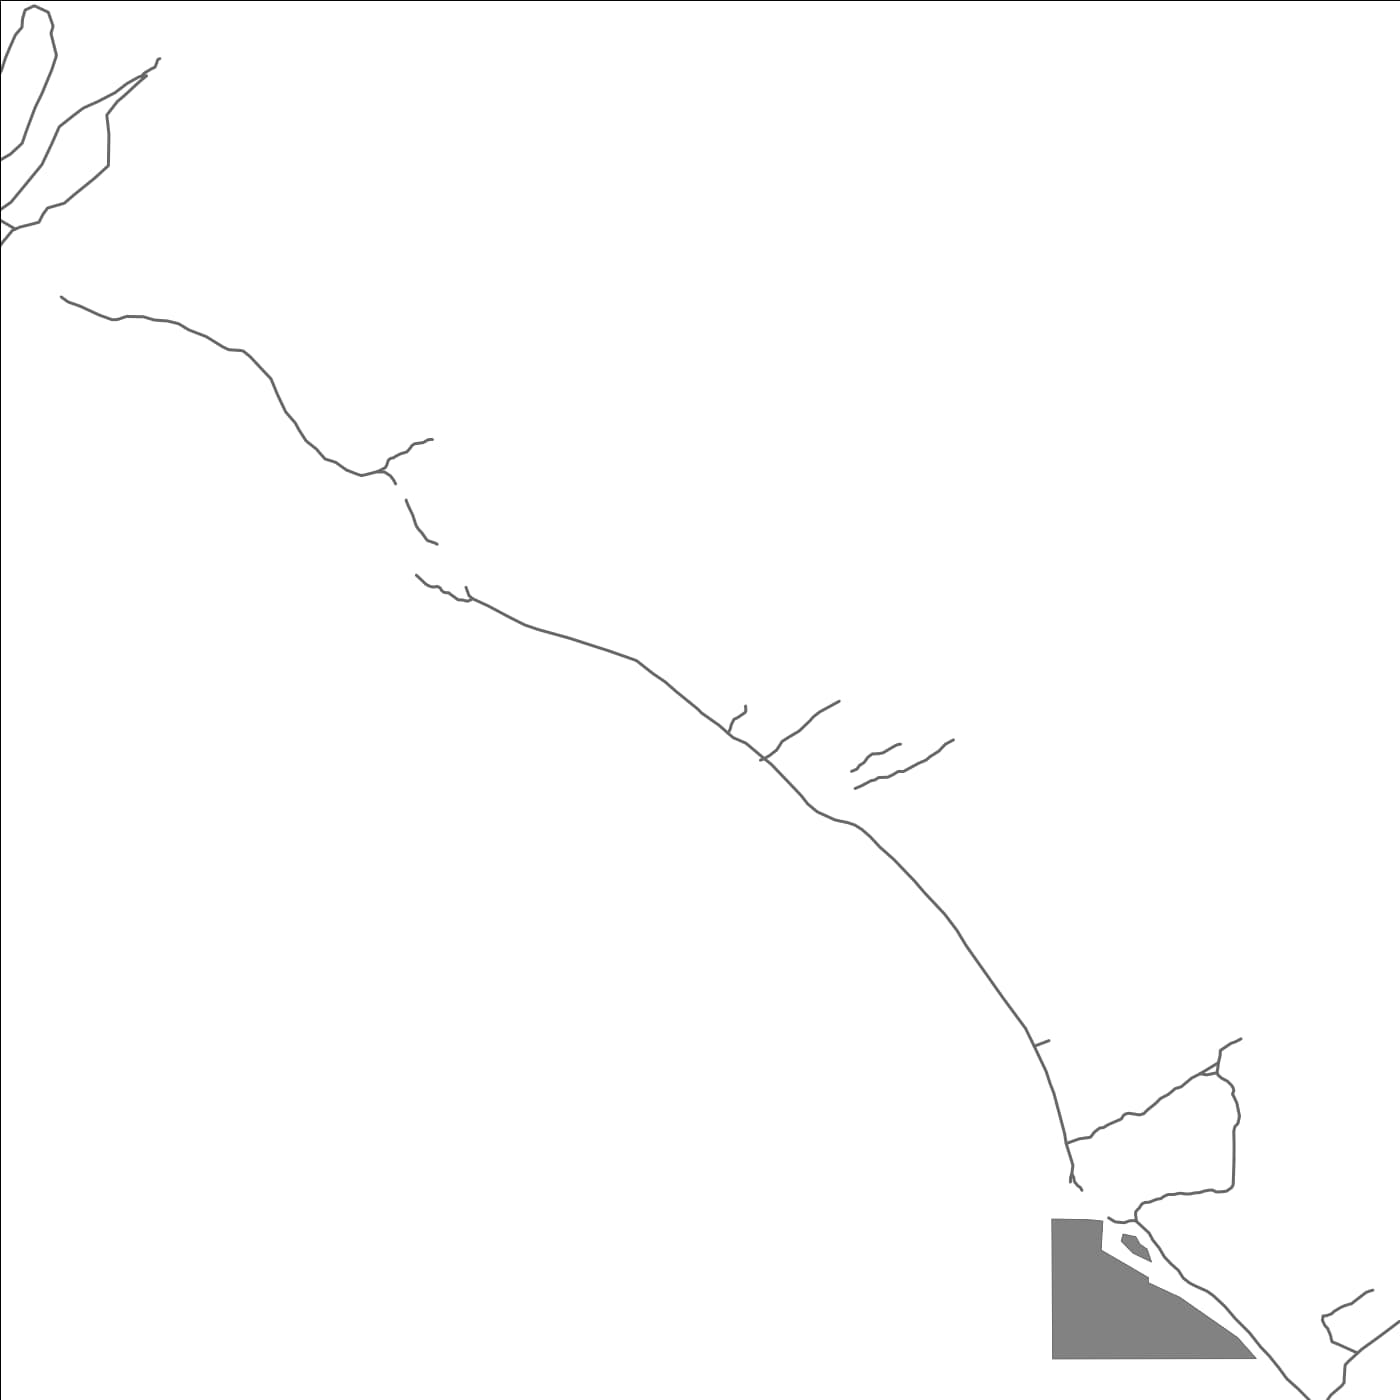 ROAD MAP OF TABITEUEA, KIRIBATI BY MAPBAKES